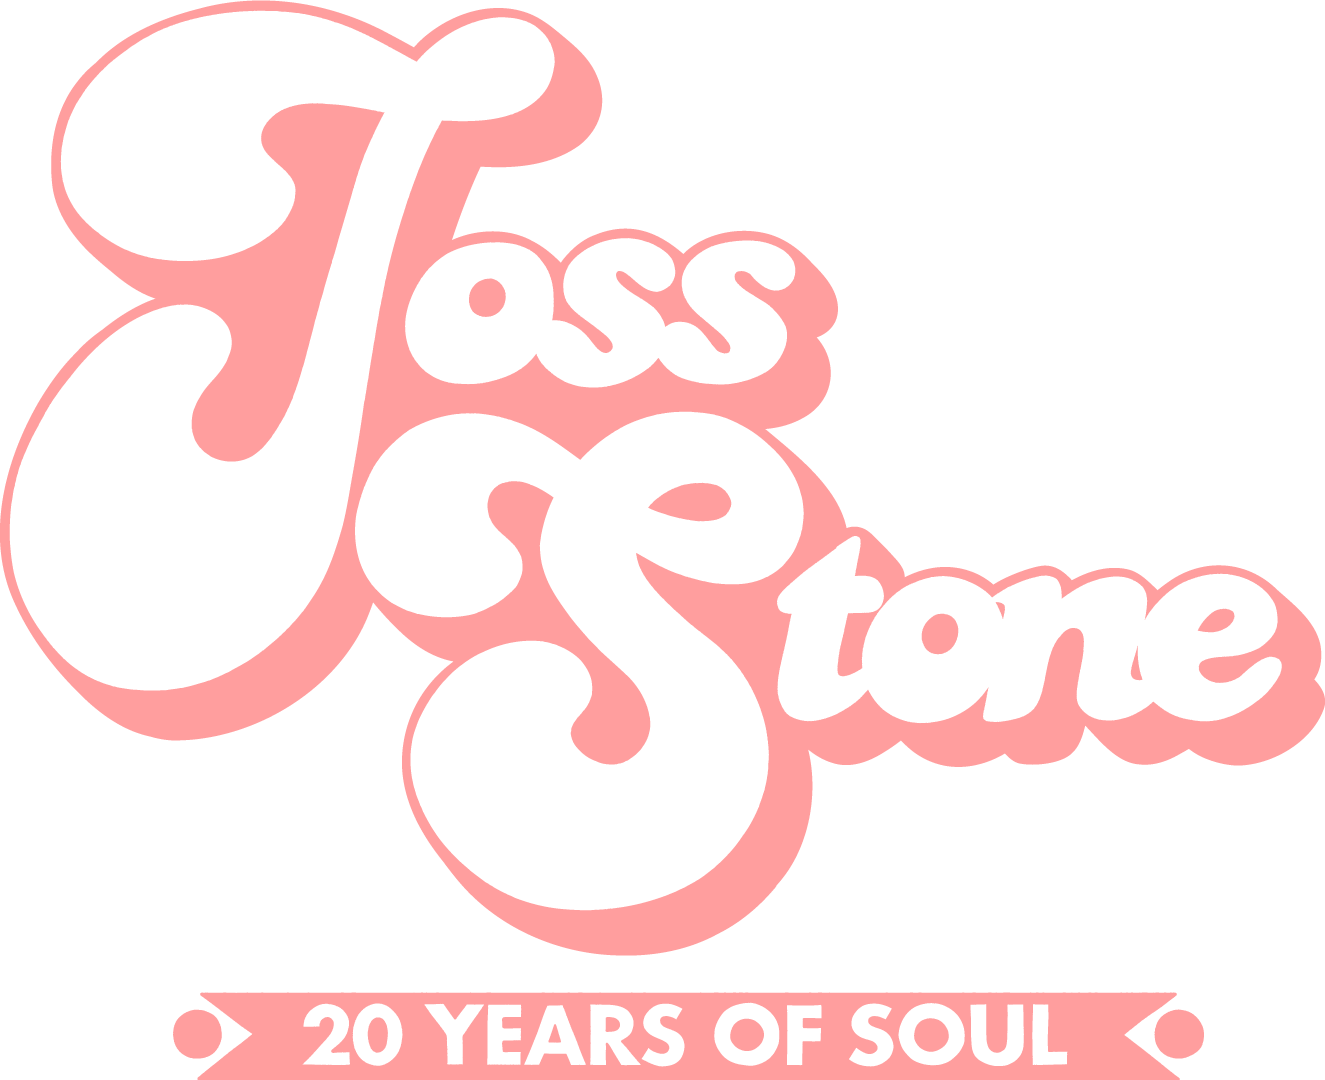 Joss Stone - Stuck On You - Tom Brasil, São Paulo, 2018 (FULL HD 1080p) 